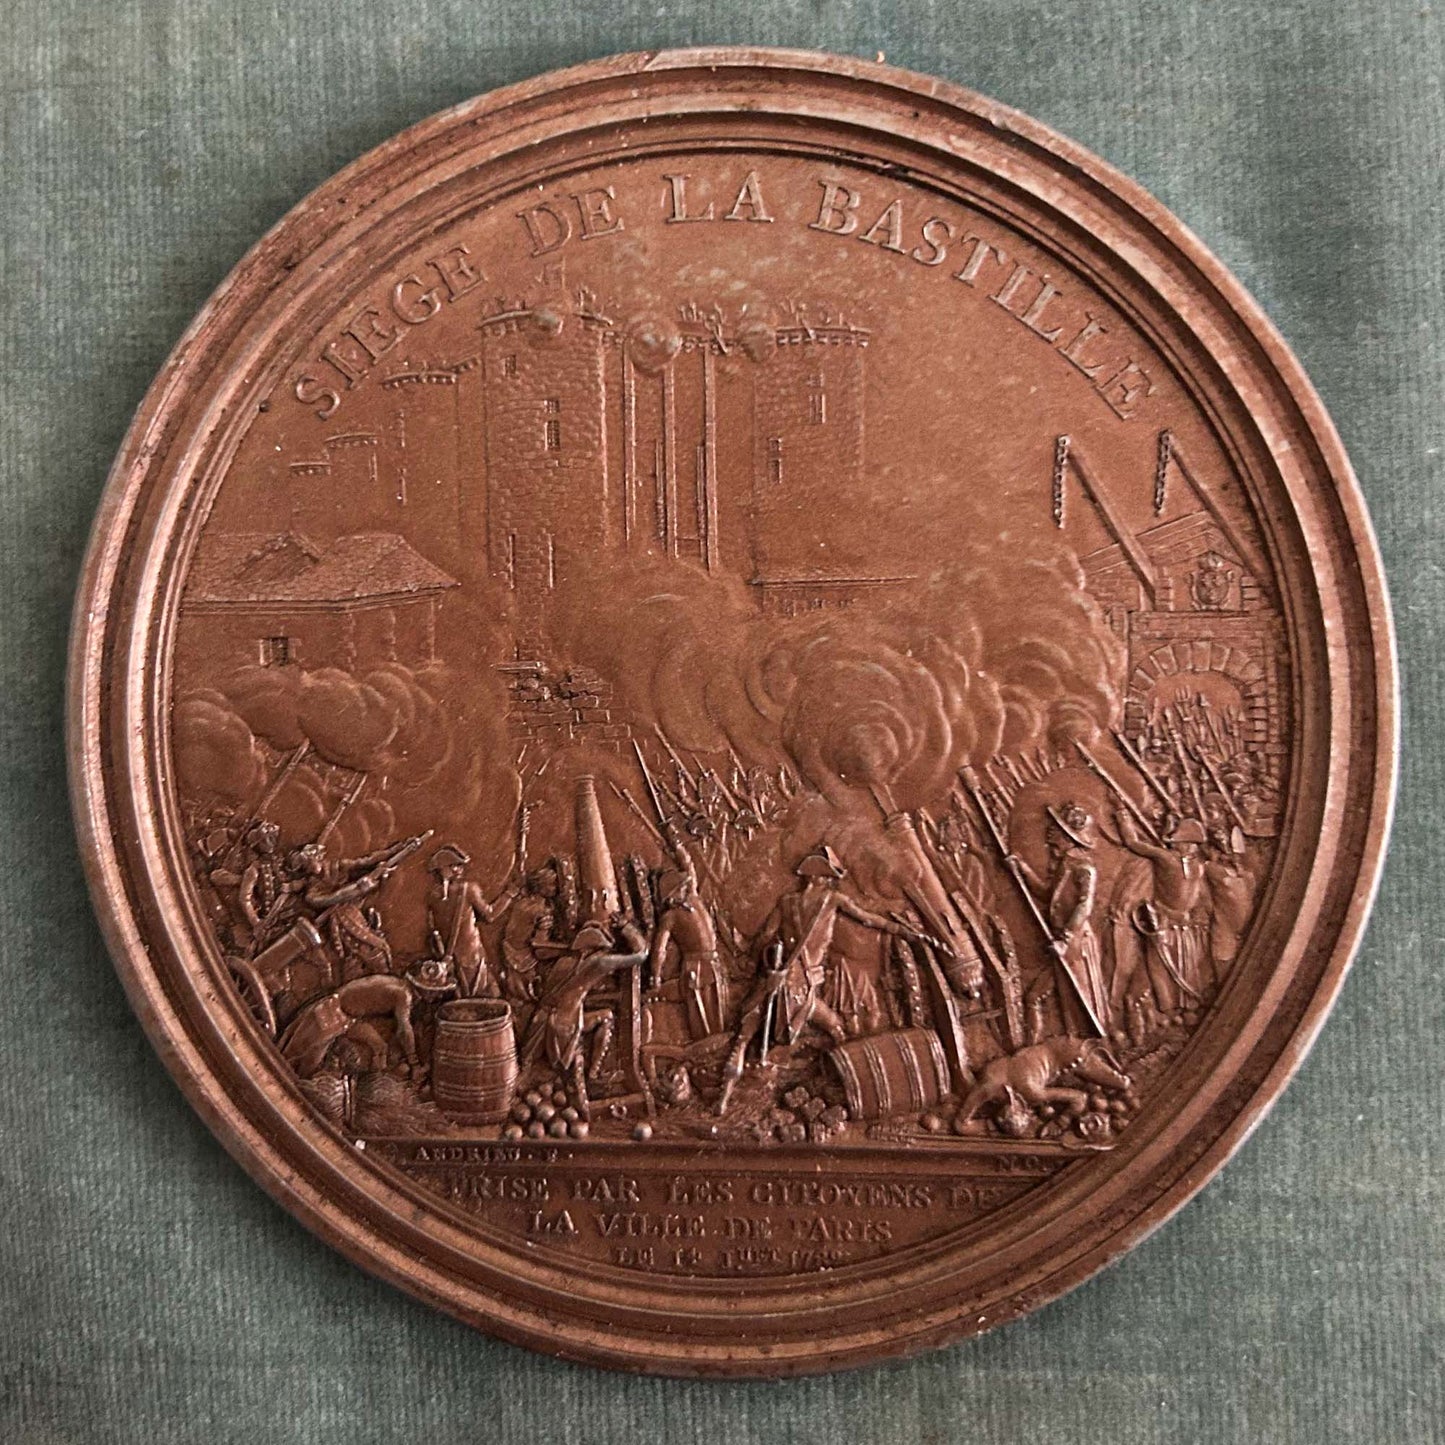  Napolean Medal Set Two